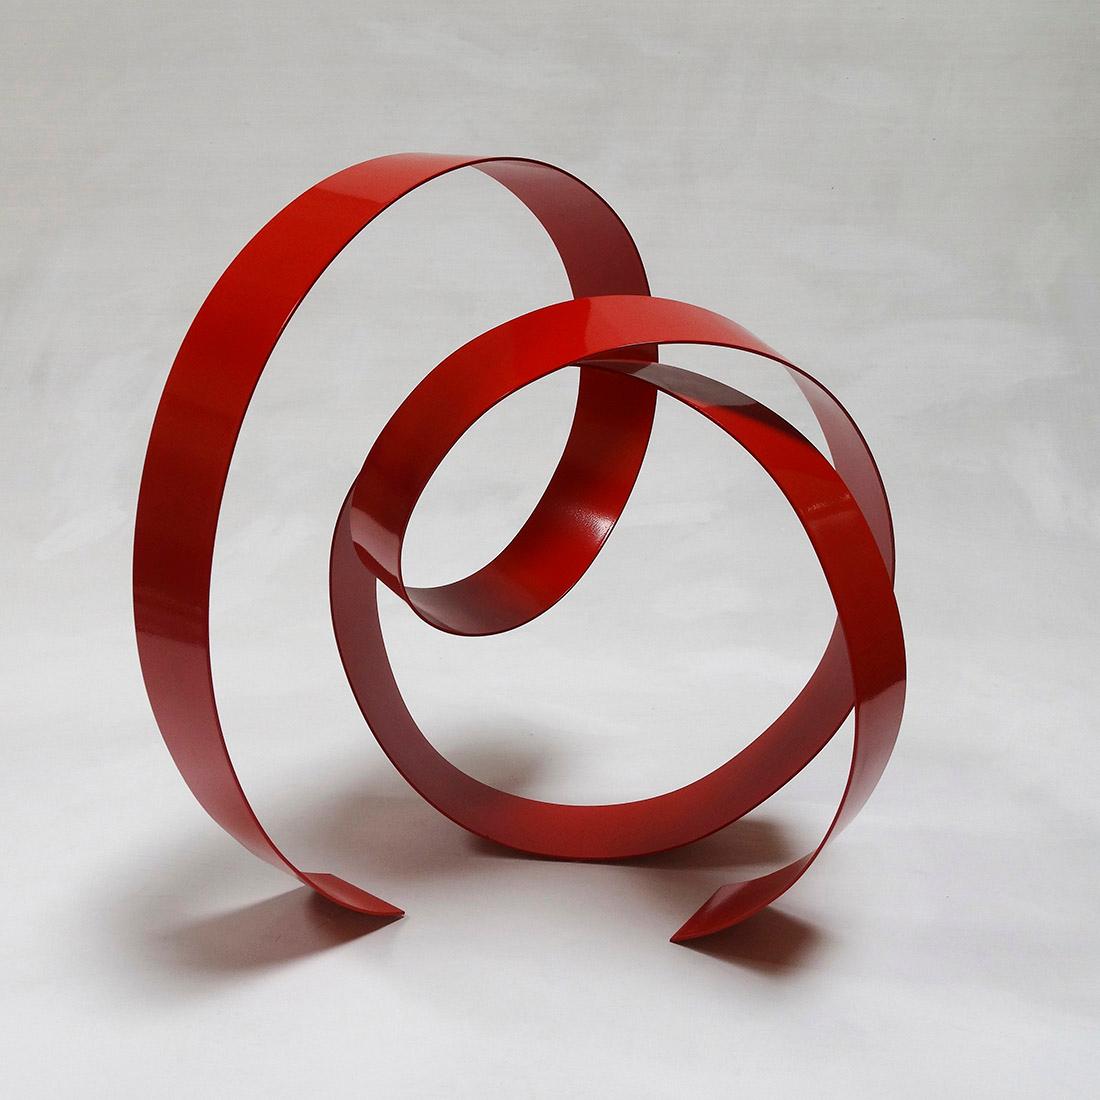 Corbant Red 11 - Abstract, Outdoor Sculpture, Contemporary, Art, Rafael Amorós 1